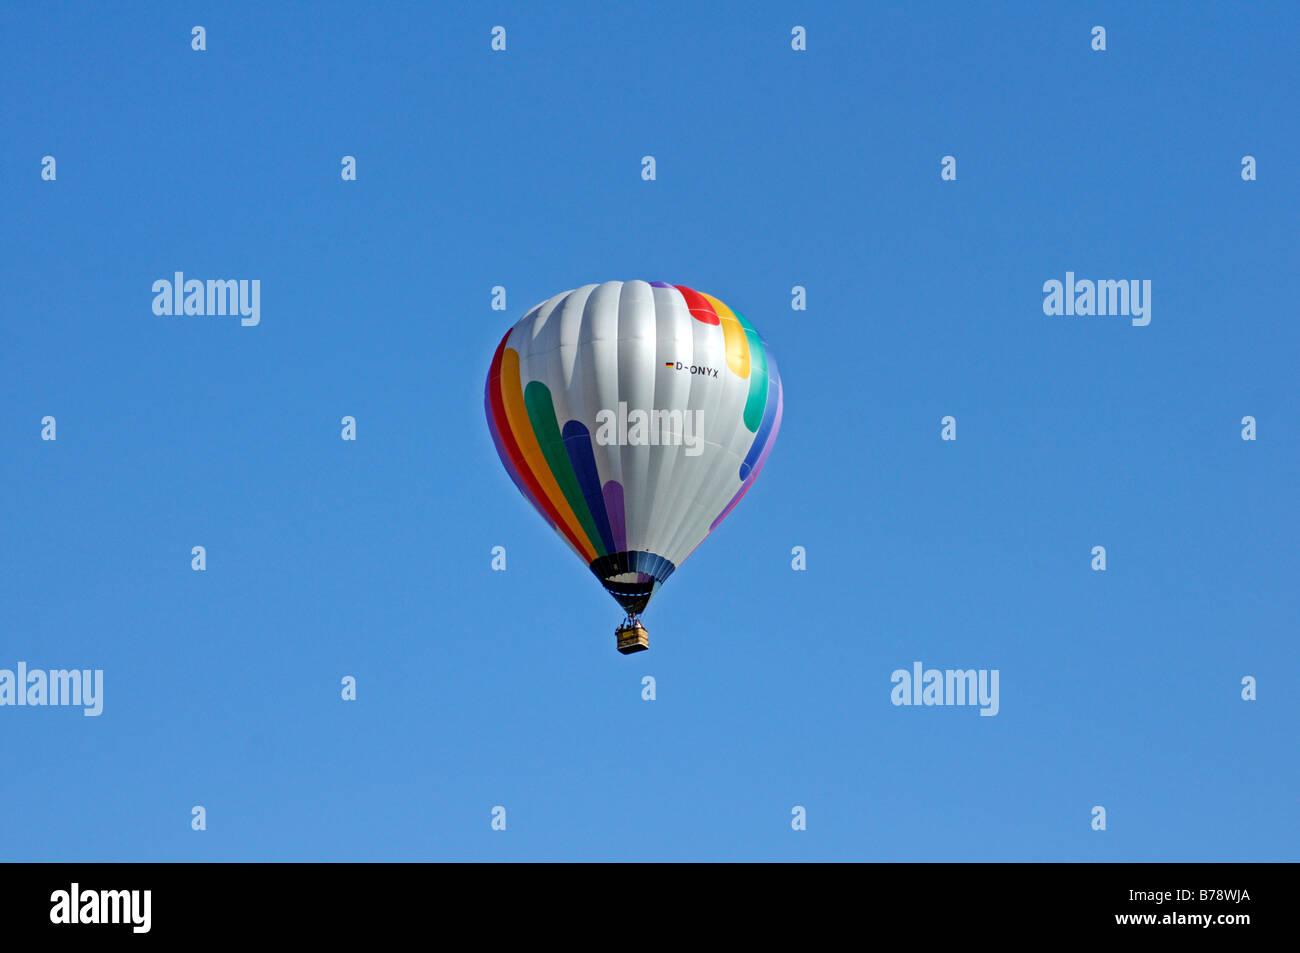 Hot-air balloon, Germany, Europe Stock Photo